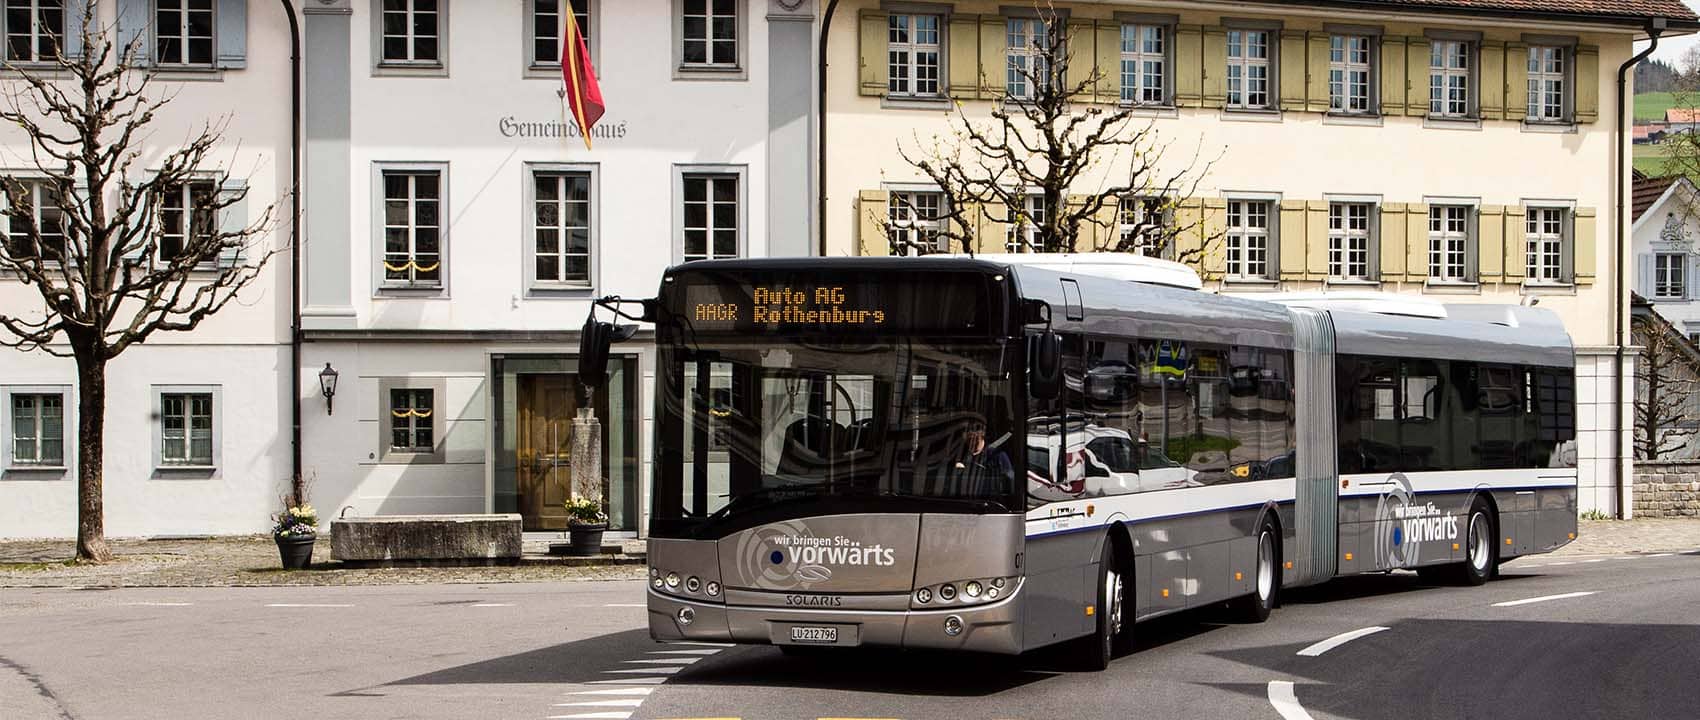 Header_Autoag_Rothenburg_Bus_1